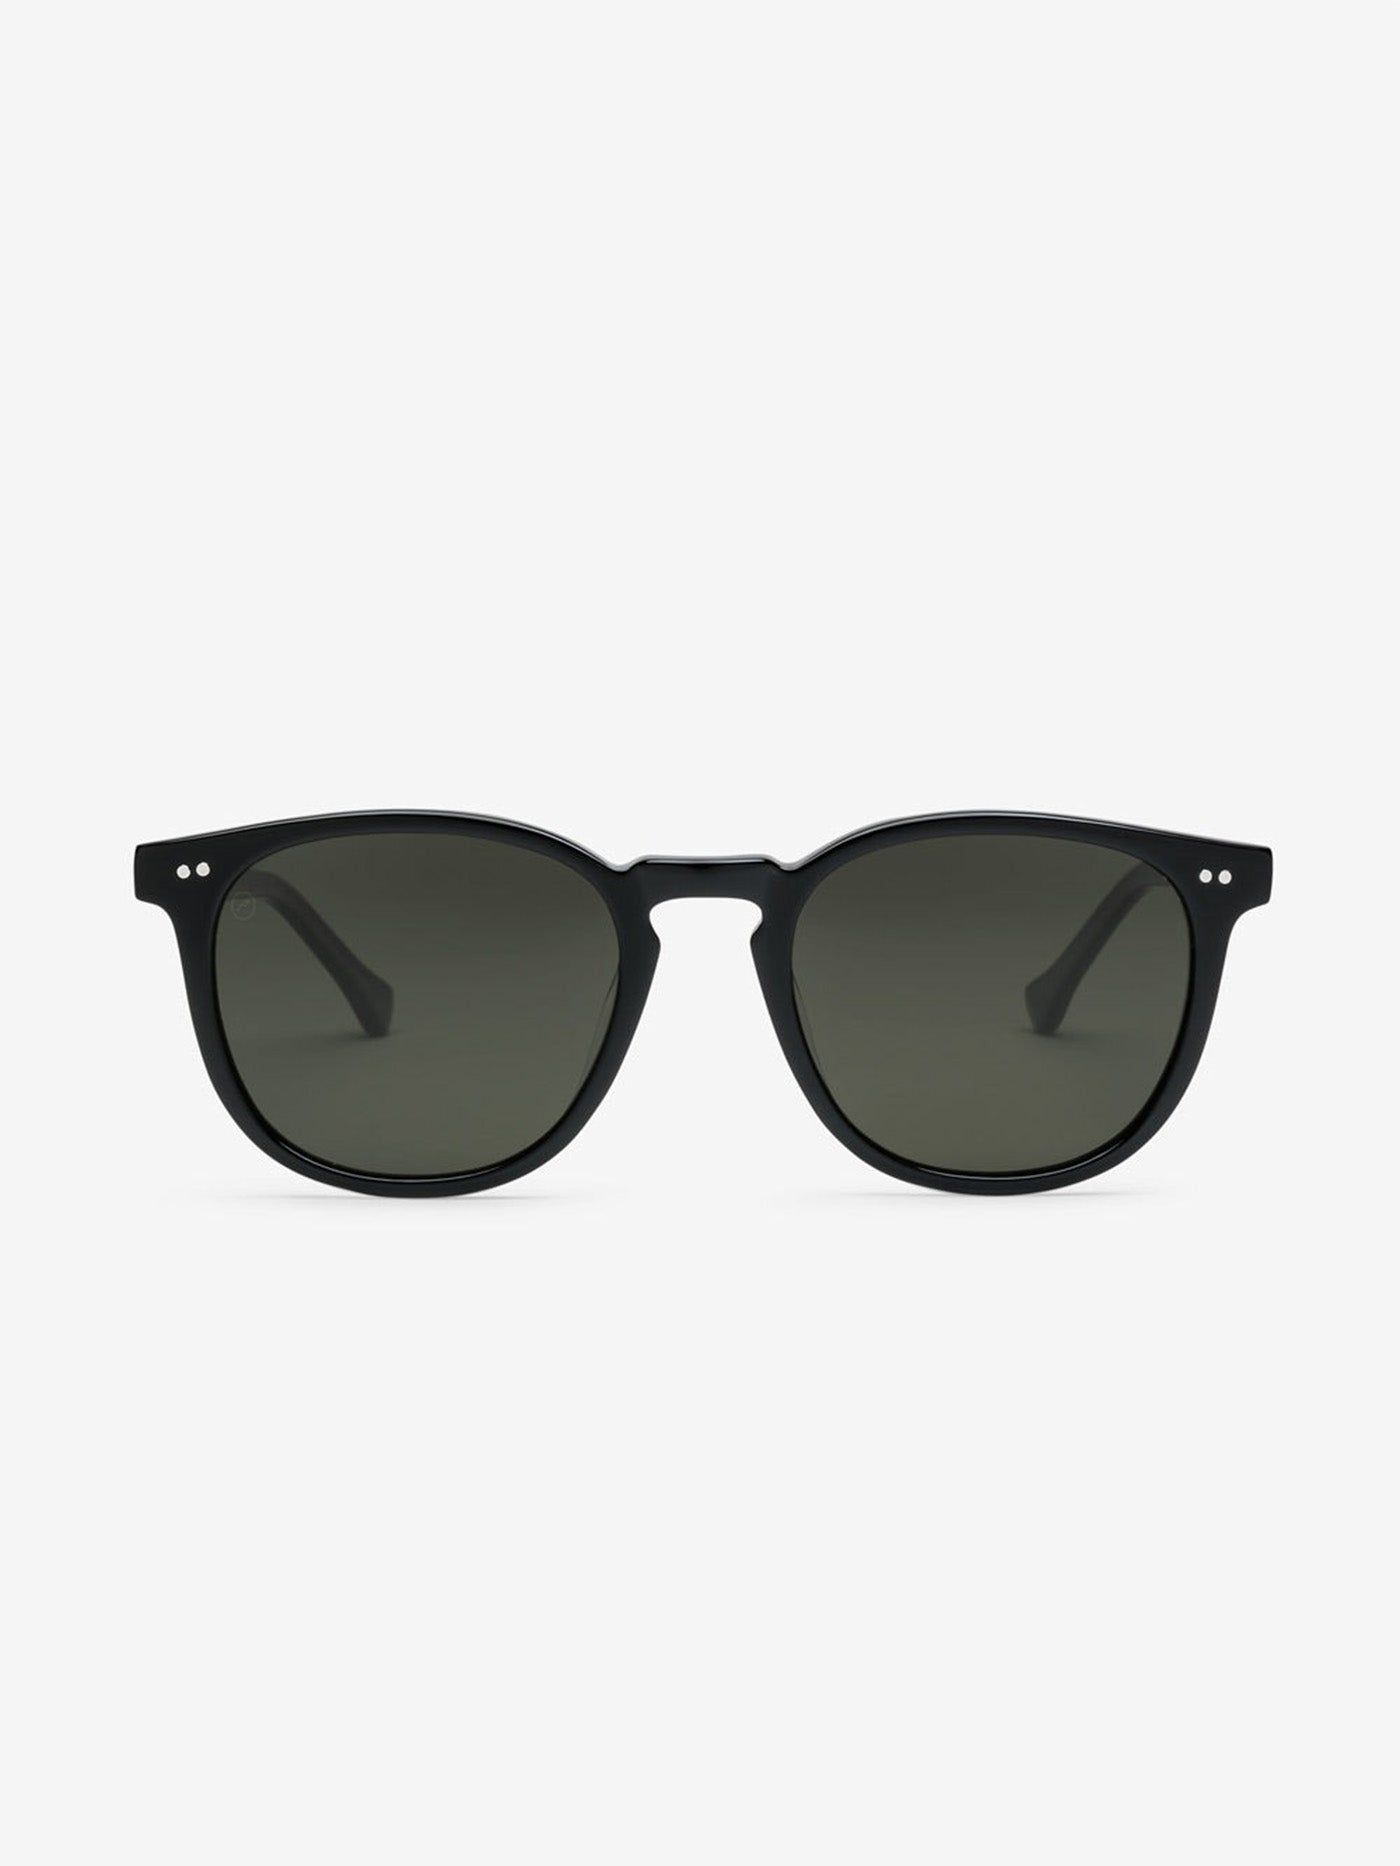 Electric Oak Gloss Black/Grey Polarized Sunglasses